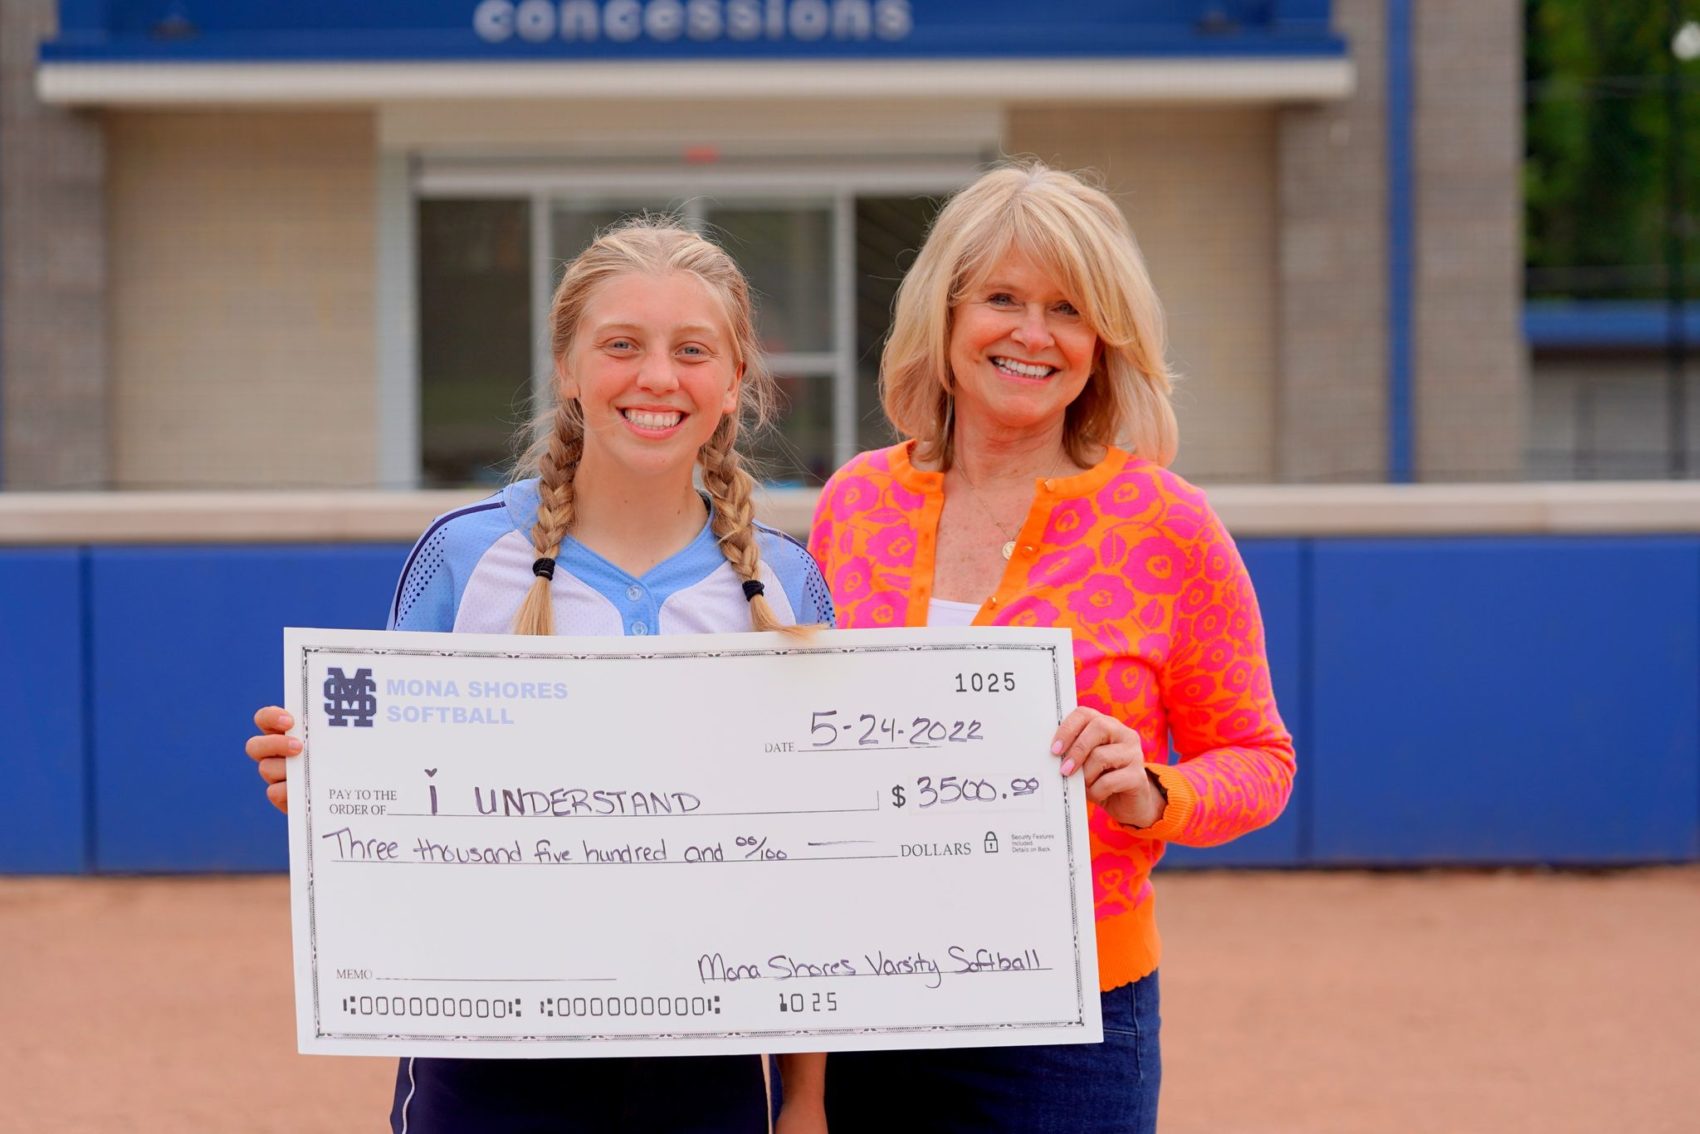 Mona Shores girls softball team presents $3,500 check to “I Understand”